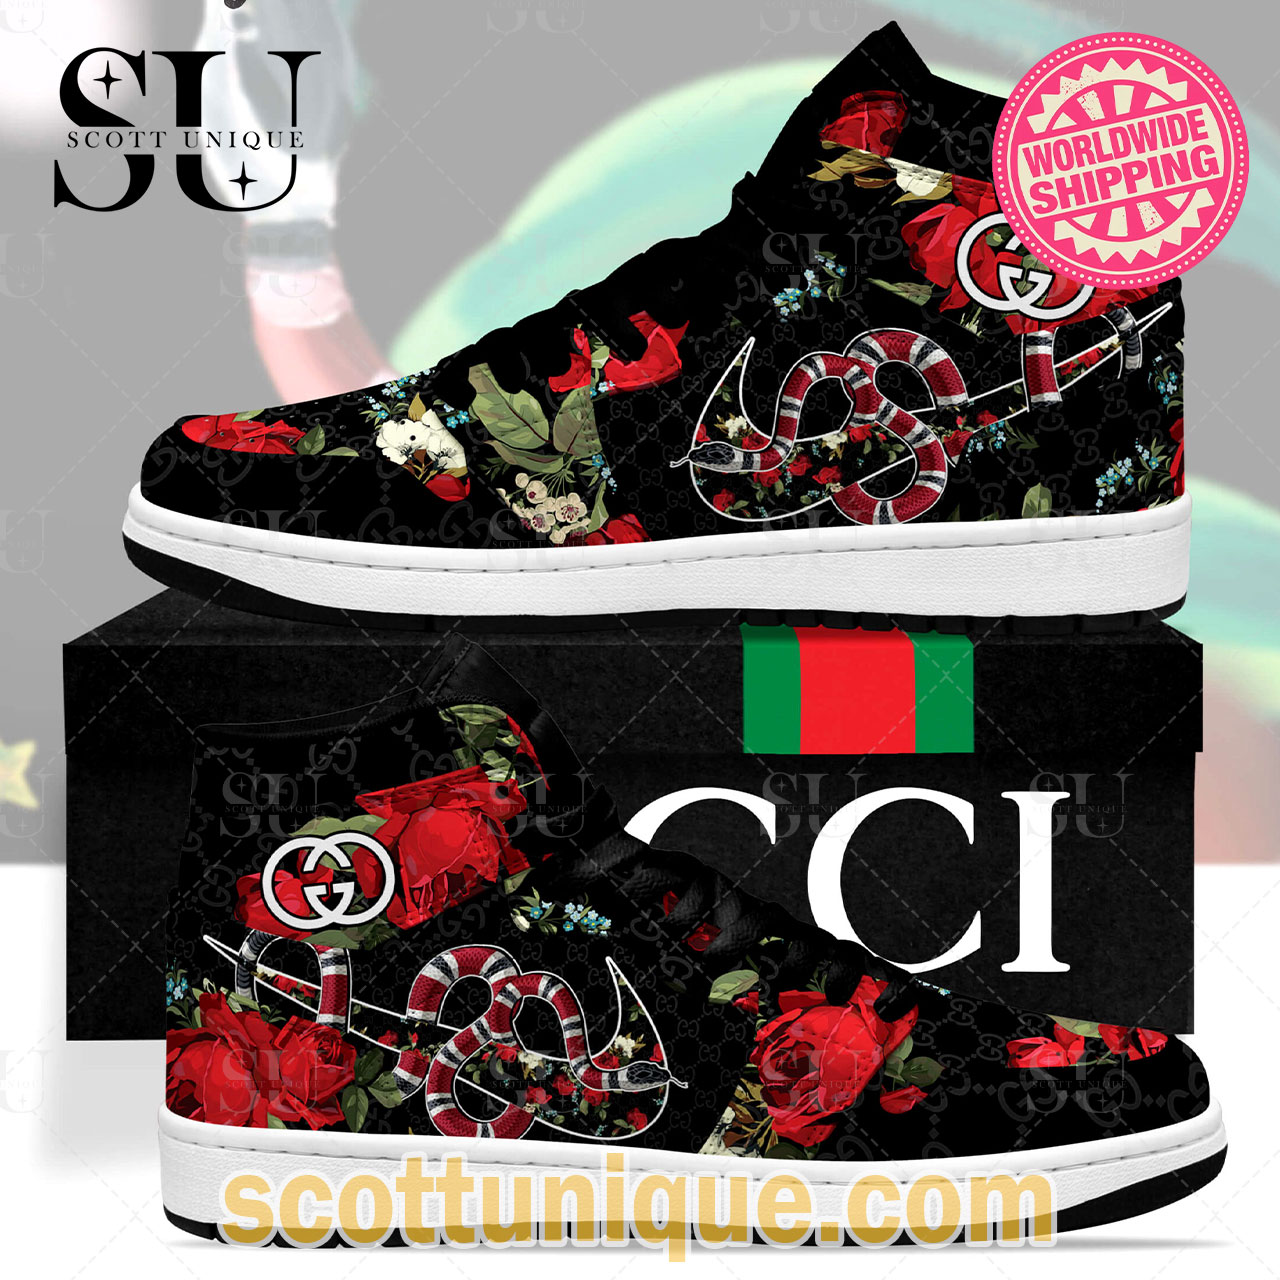 Gucci x Nike Kingsnake Rose Premium Jordan High Top Shoes